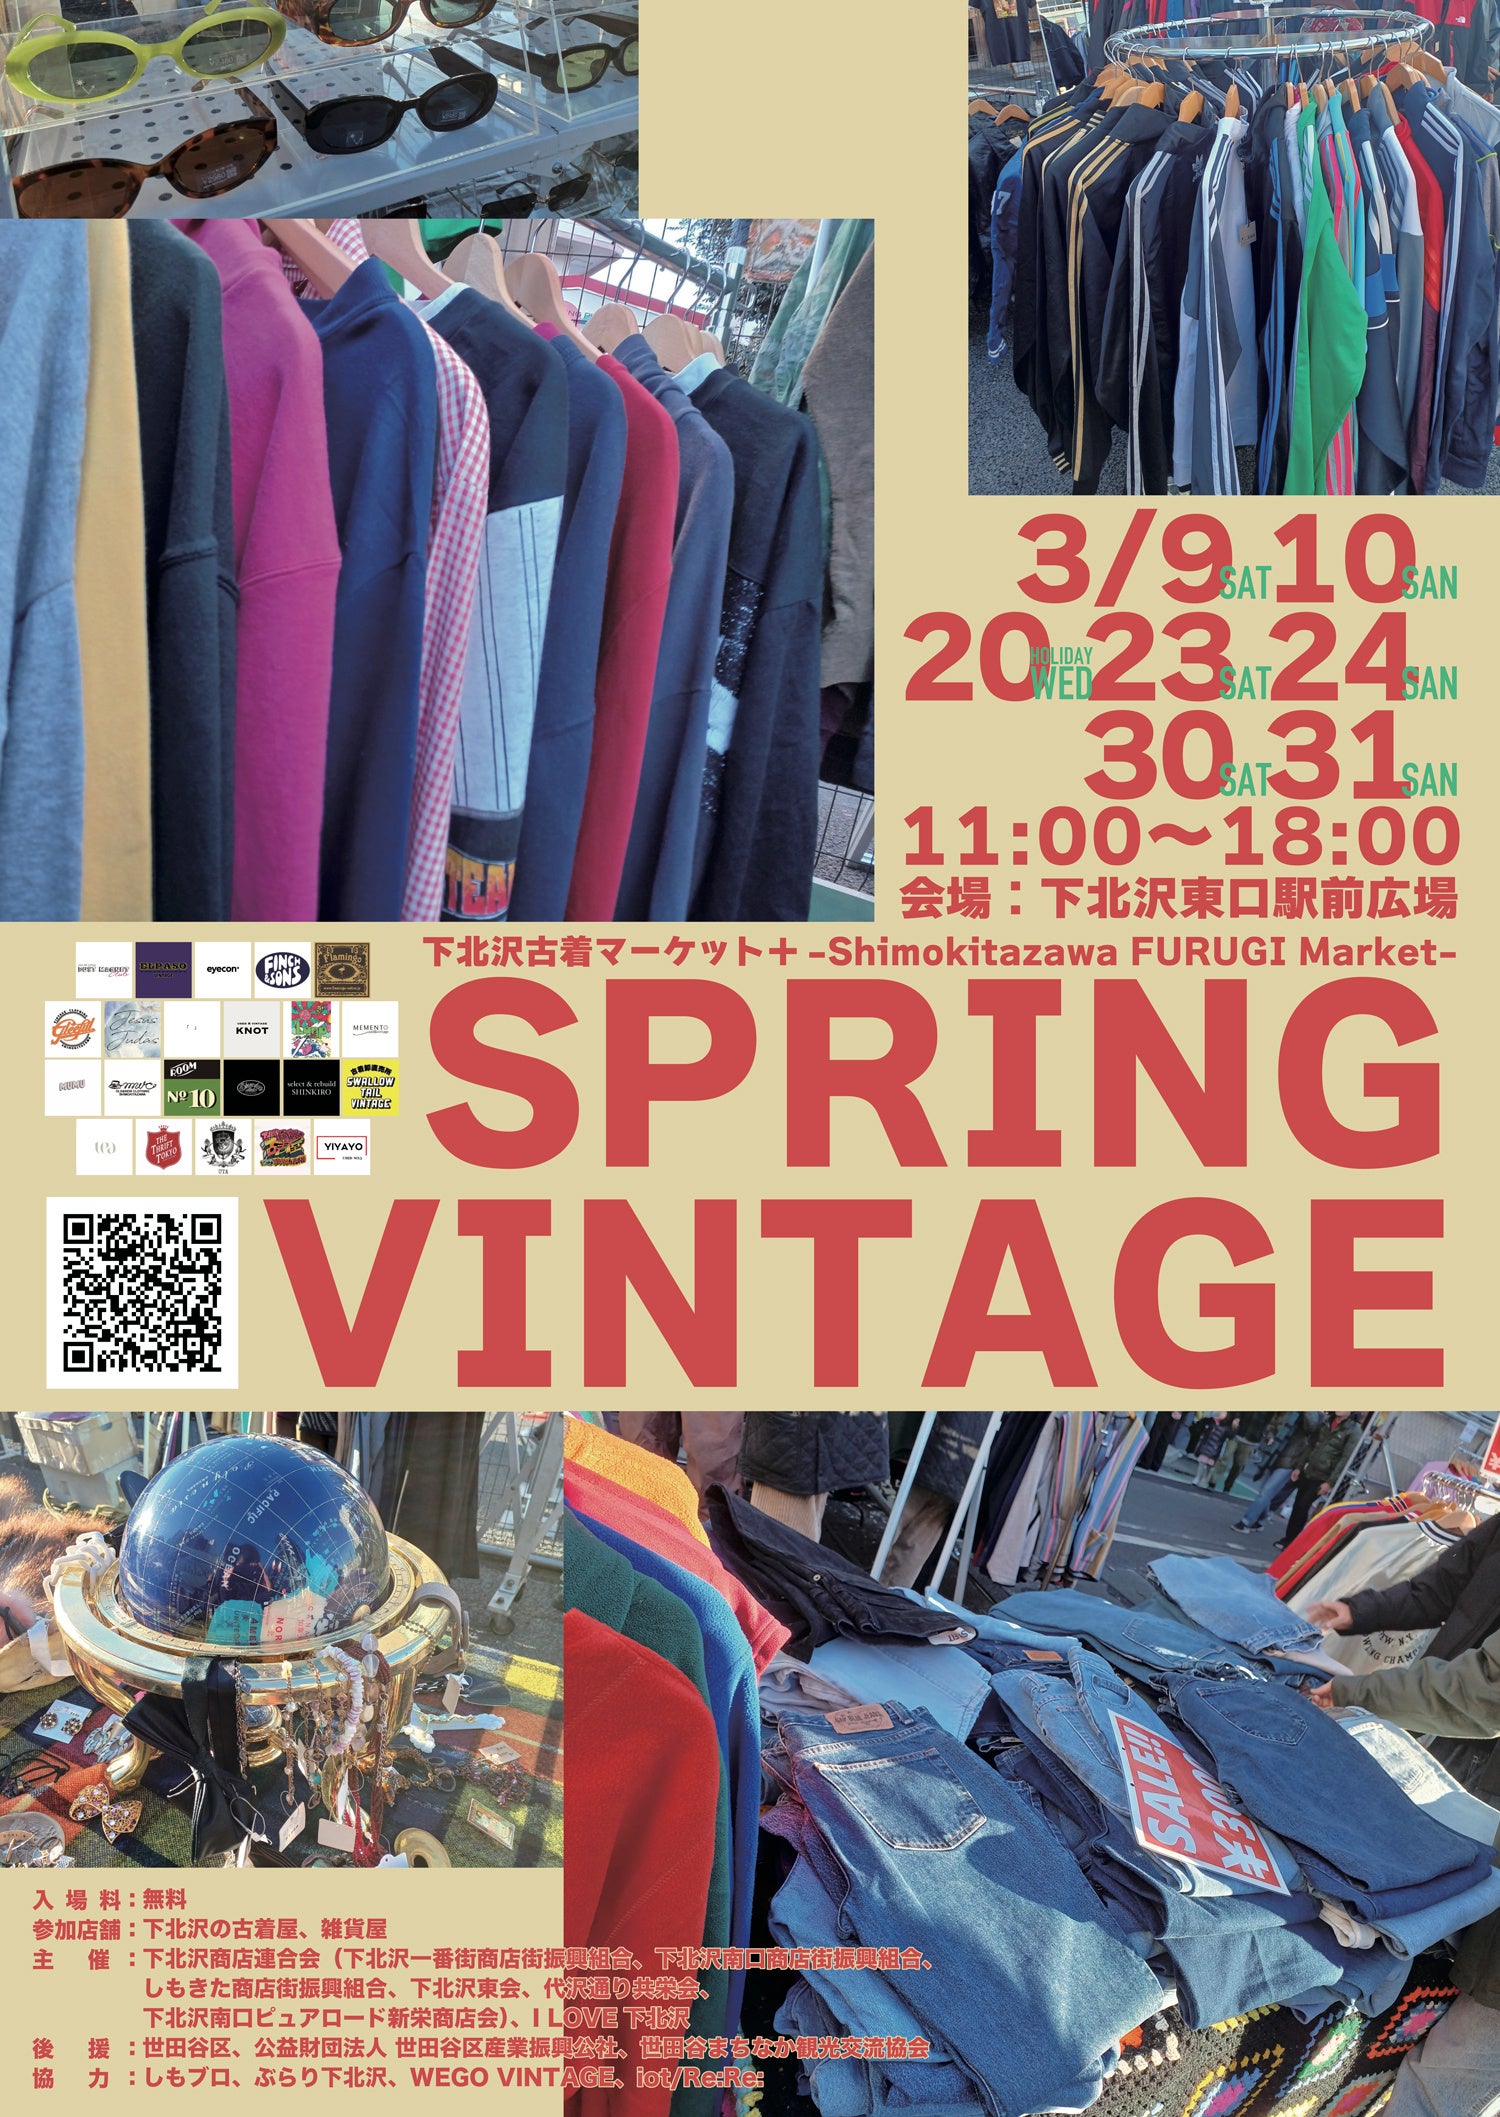 k򂪏tFɐ܂It̐VX^Cɓ悤IukÒ}[Pbg+ivXjSpring Vintage-Shimokitazawa FURUGI Market-v